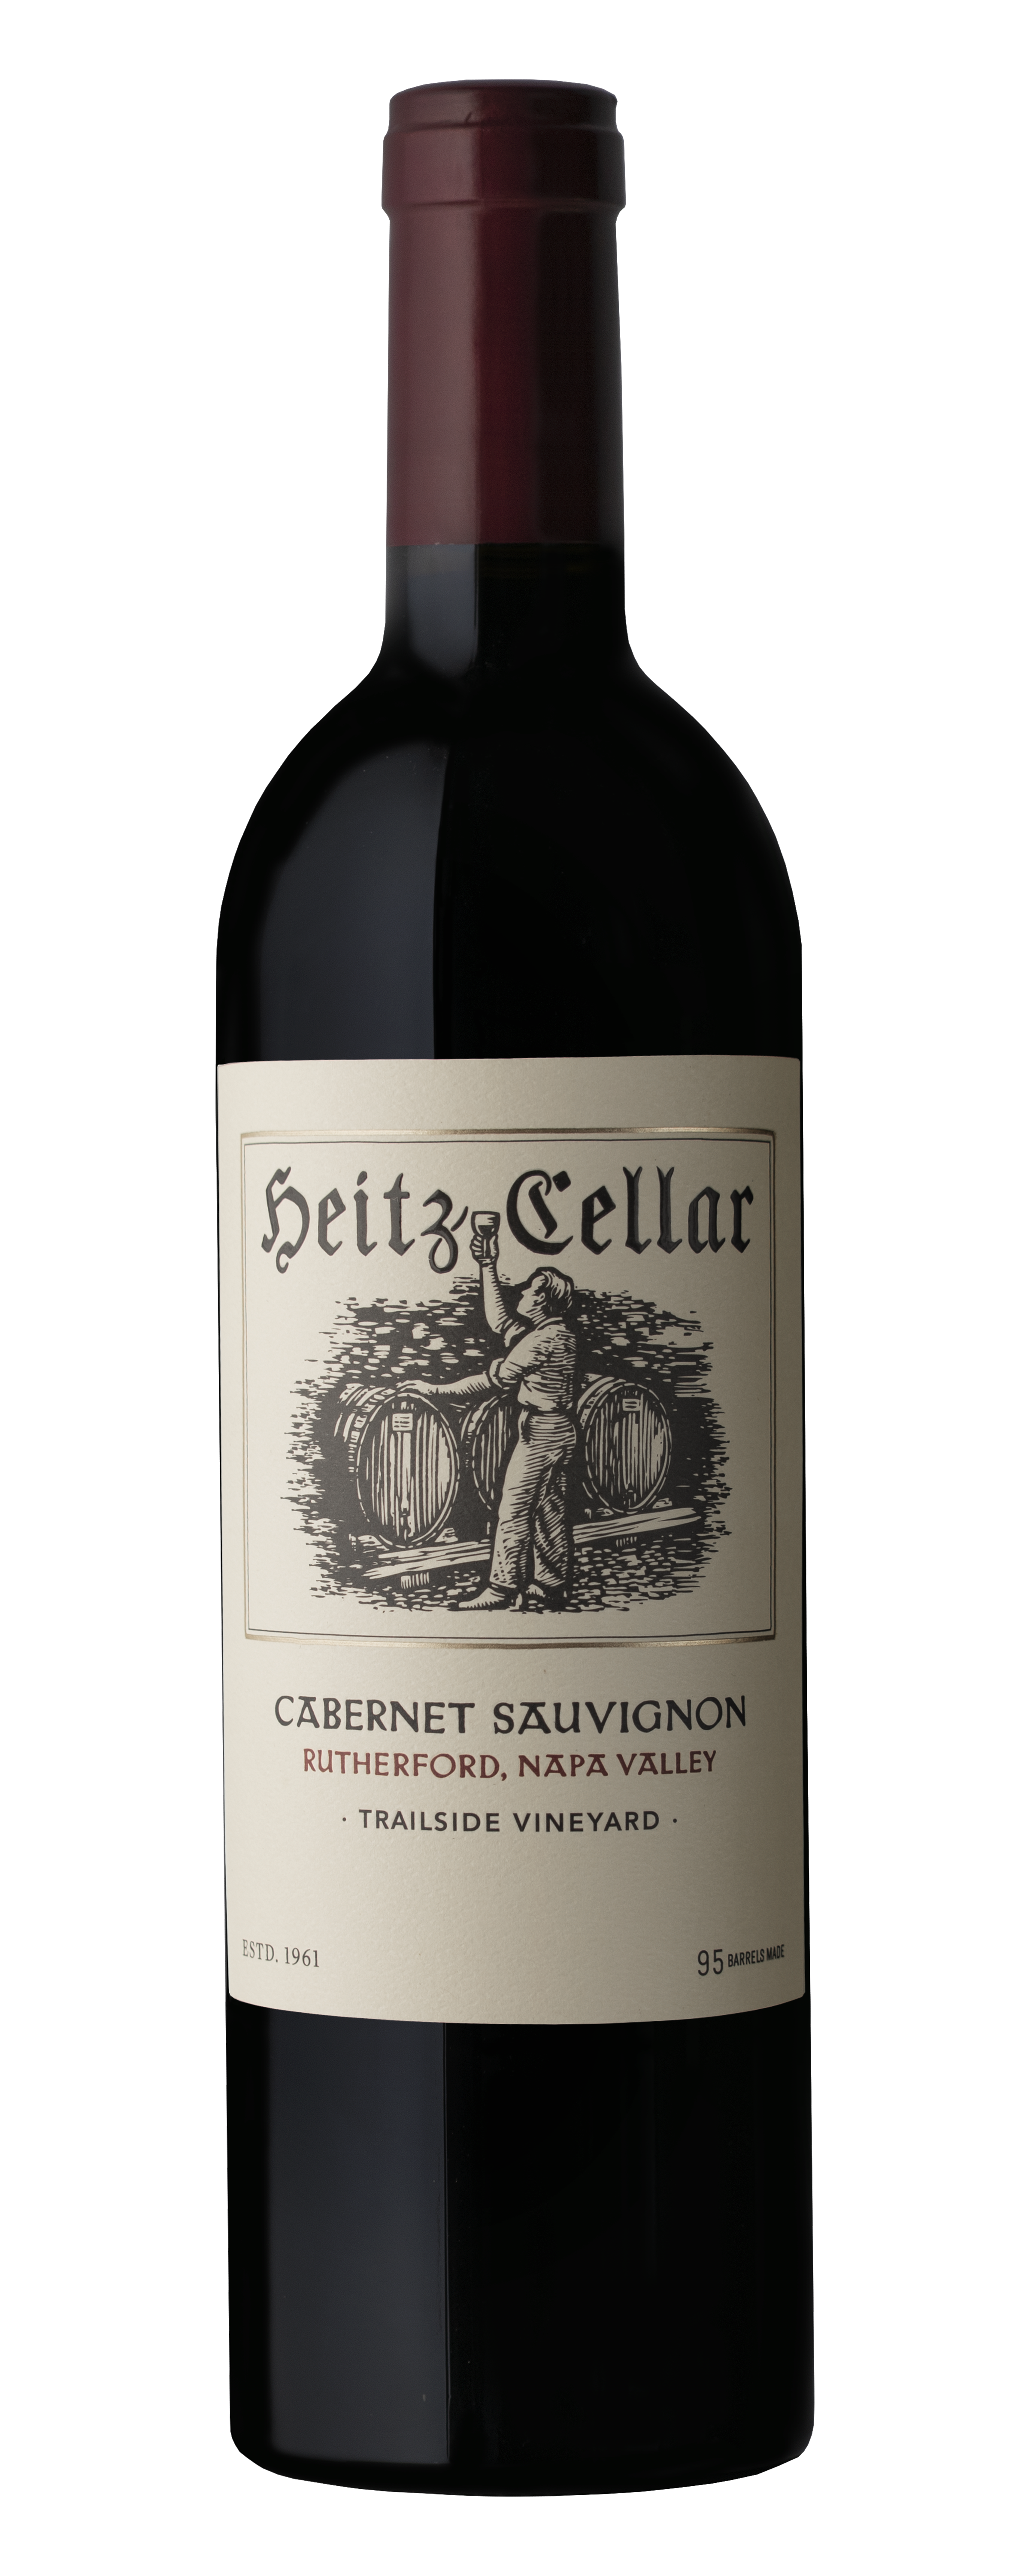 Bottle of Heitz Cellar Trailside Vineyard Rutherford Cabernet Sauvignon